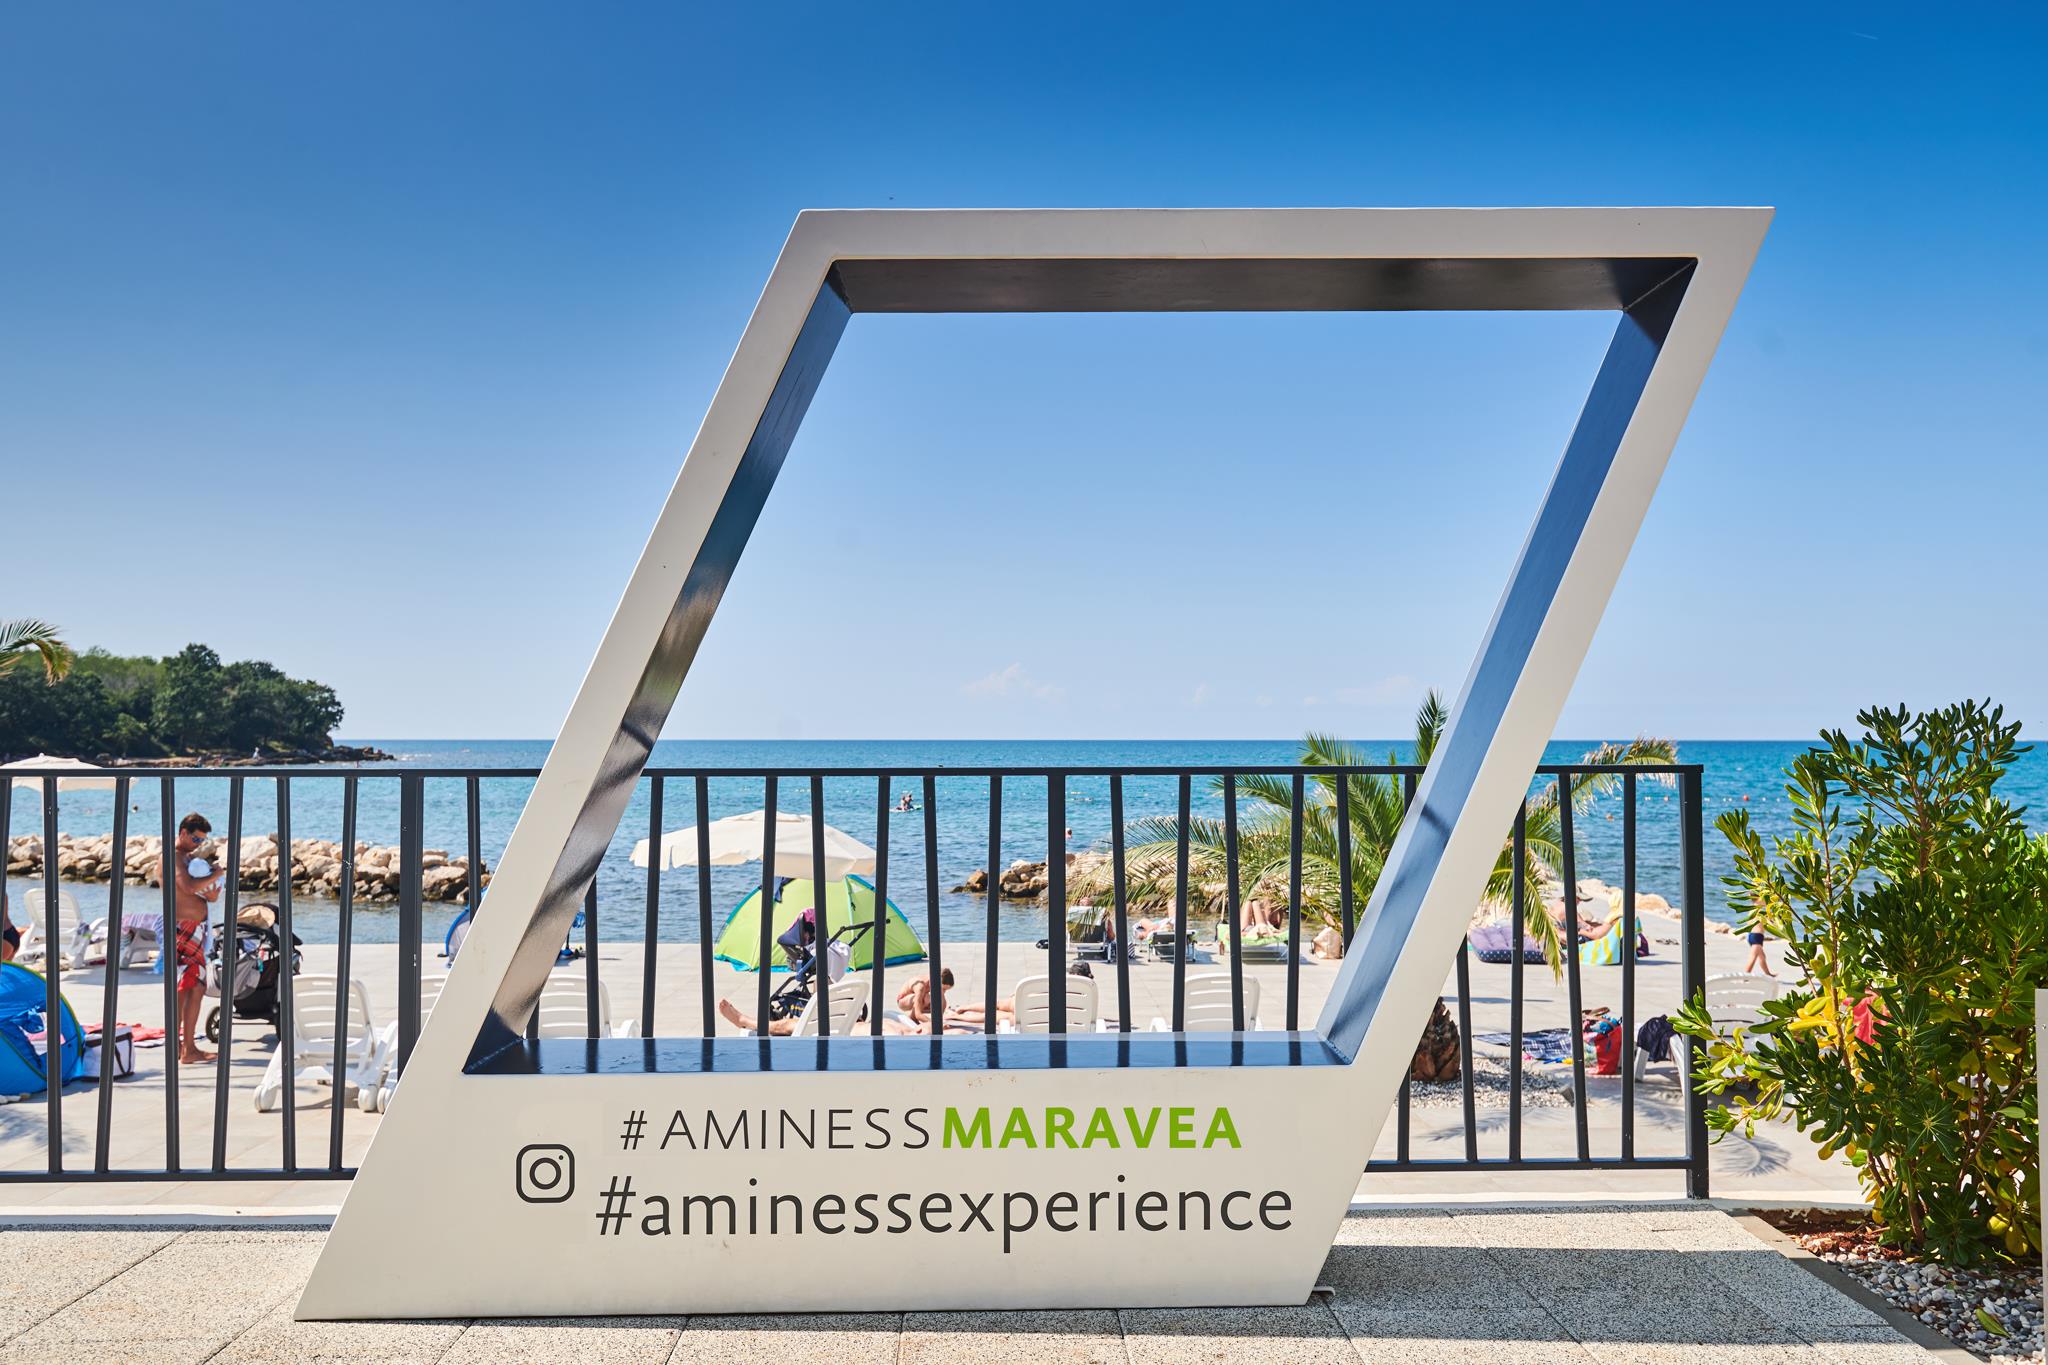  Aminess Maravea Camping Resort - Mareda